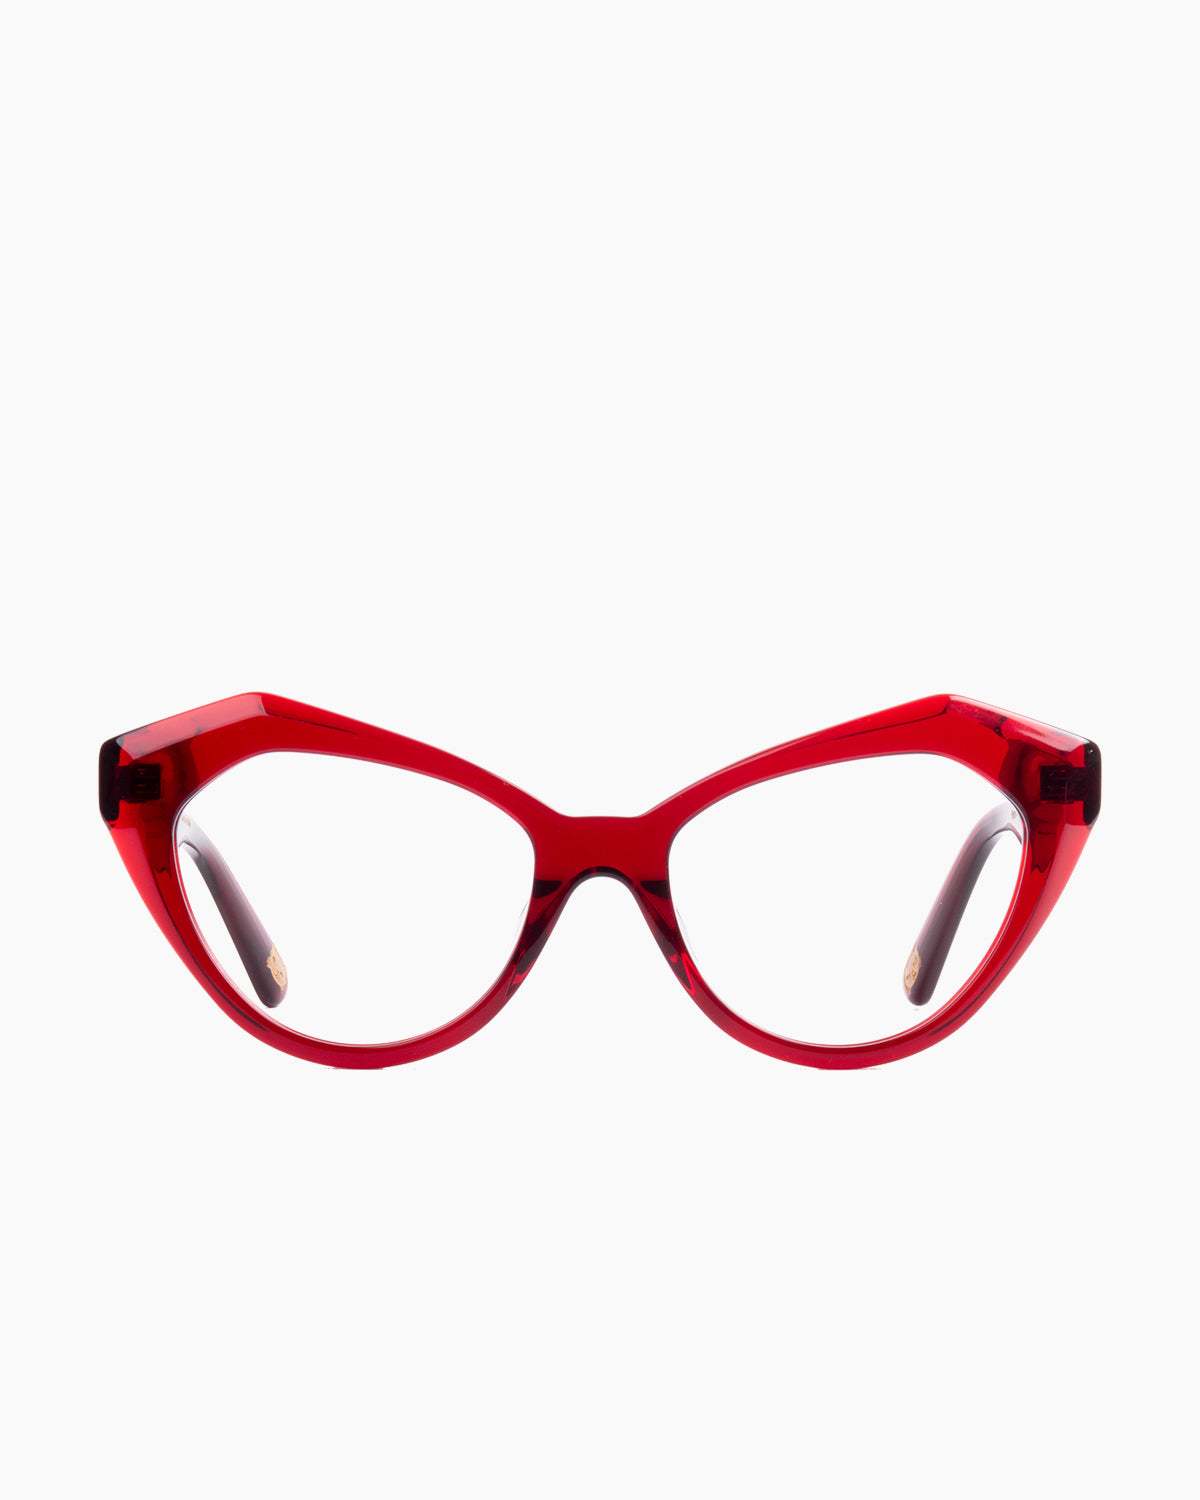 Spectacleeyeworks - Ayalah - c730 | Bar à lunettes:  Marie-Sophie Dion